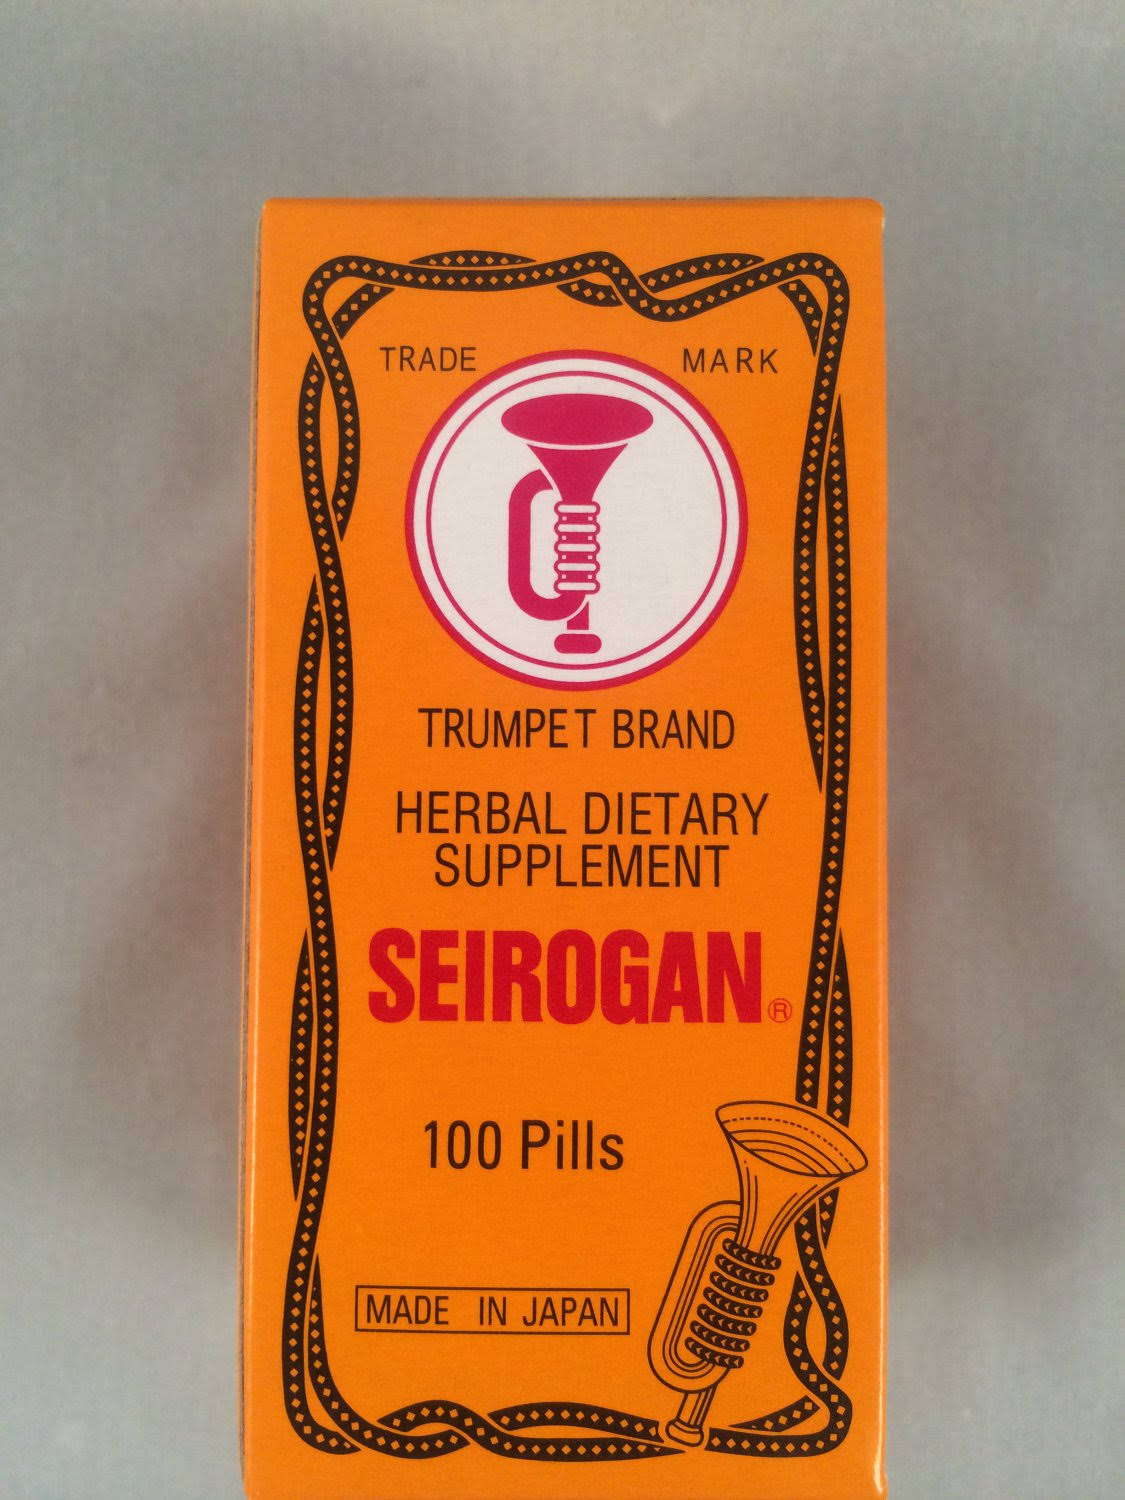 Seirogan Trumpet Brand Herbal Dietary Supplement Pills - 100ct